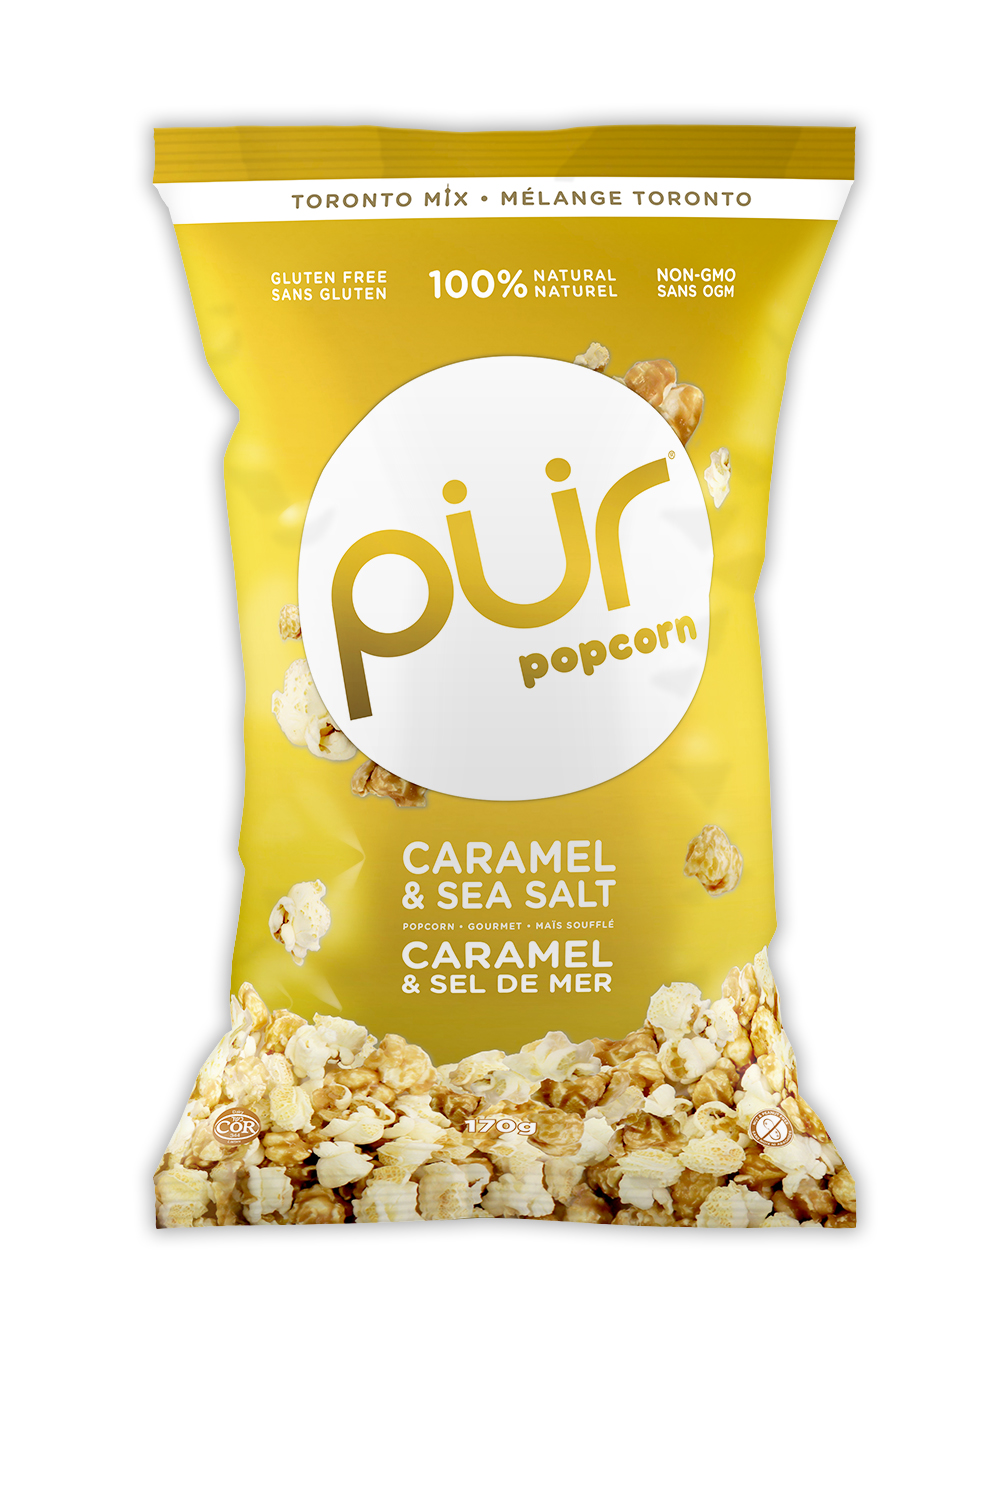 Low: Toronto Mix Popcorn